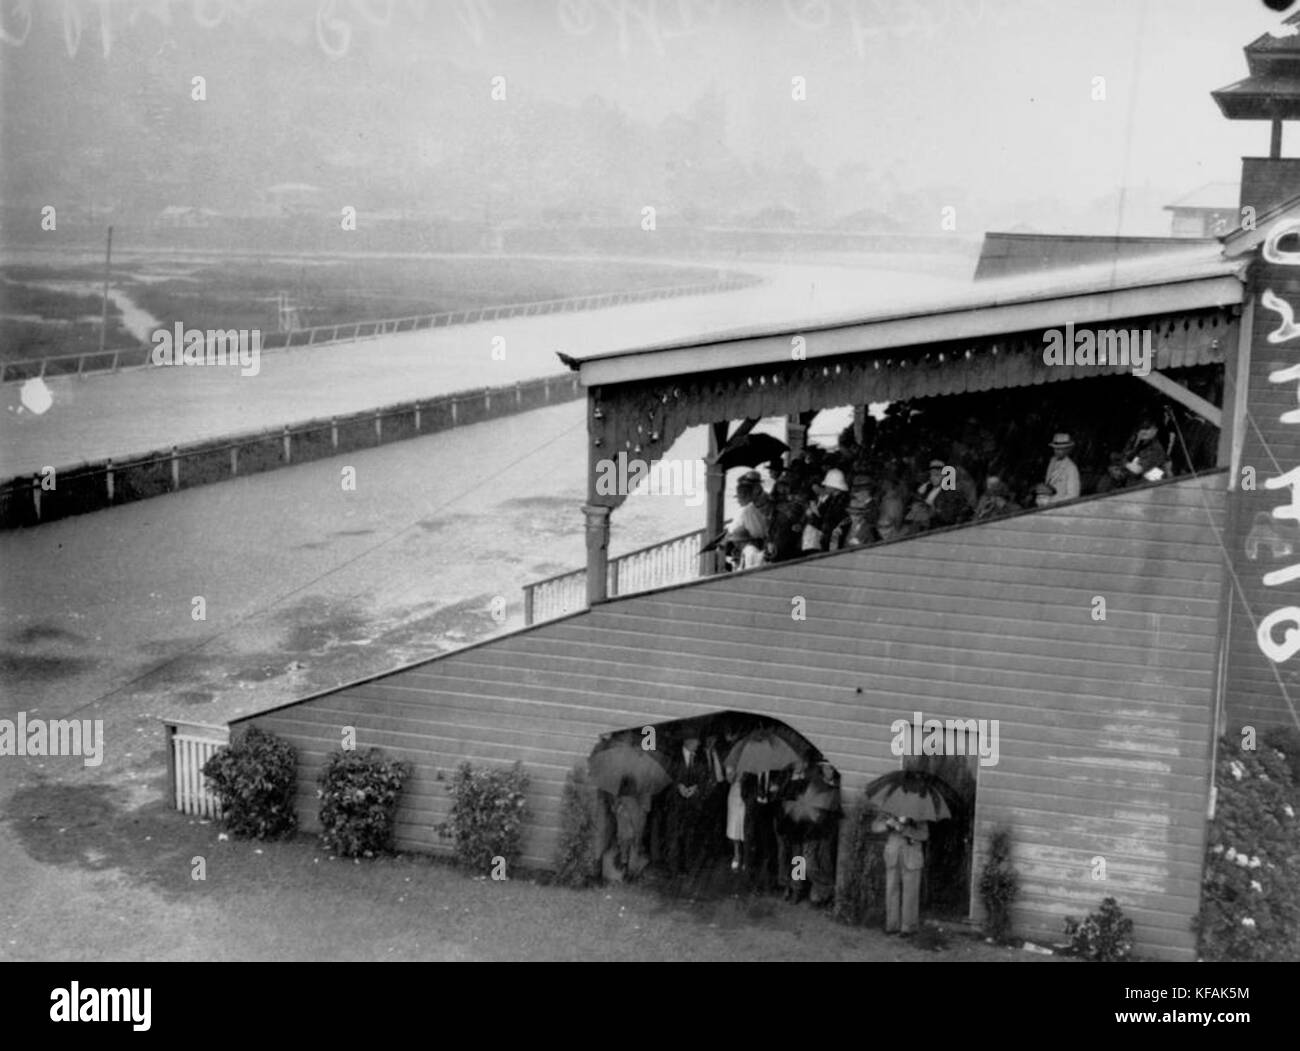 1 108592 Albion Park racetrack after a storm, Brisbane, January 1941 Stock Photo